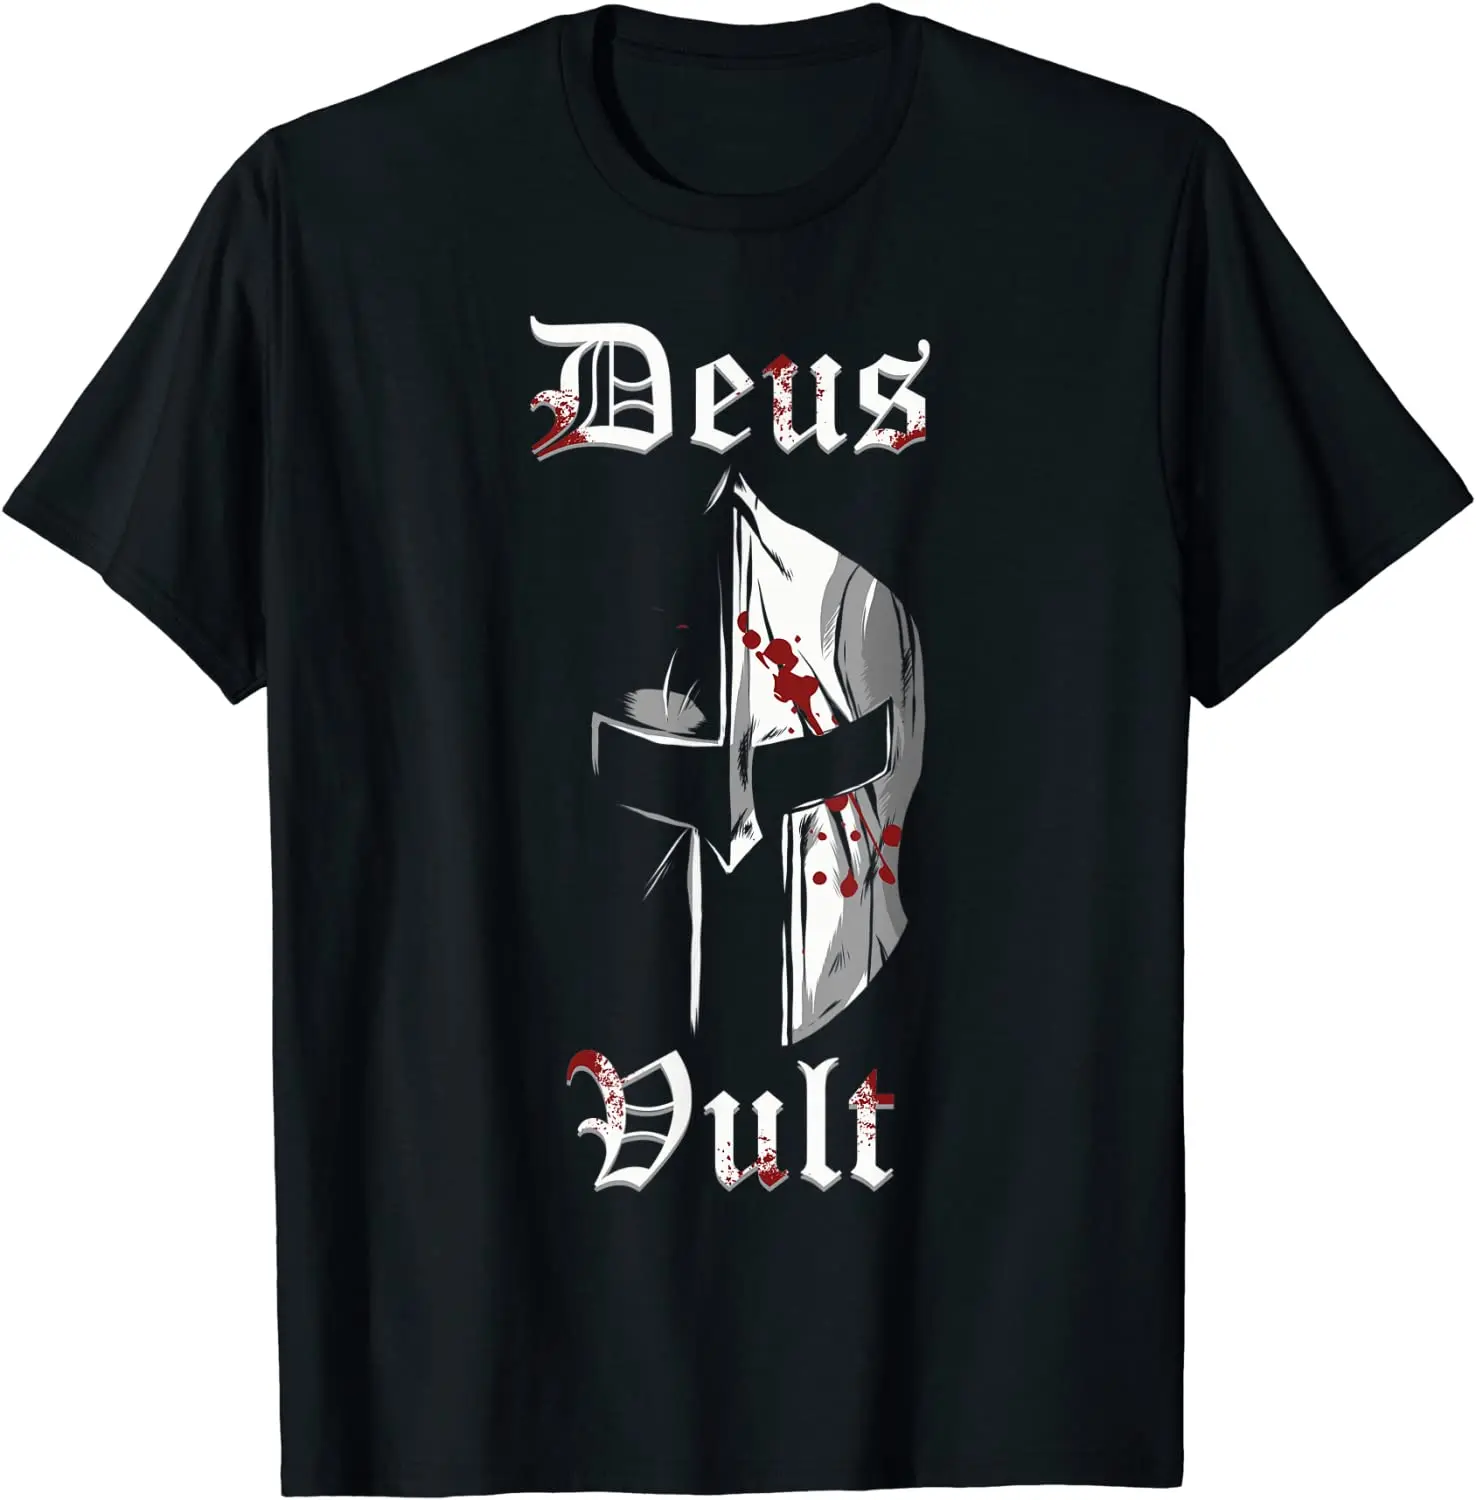 

Deus Vult Christian Motto Knights Templar Crusader T-Shirt 100% Cotton O-Neck Summer Short Sleeve Casual Mens T-shirt Size S-3XL